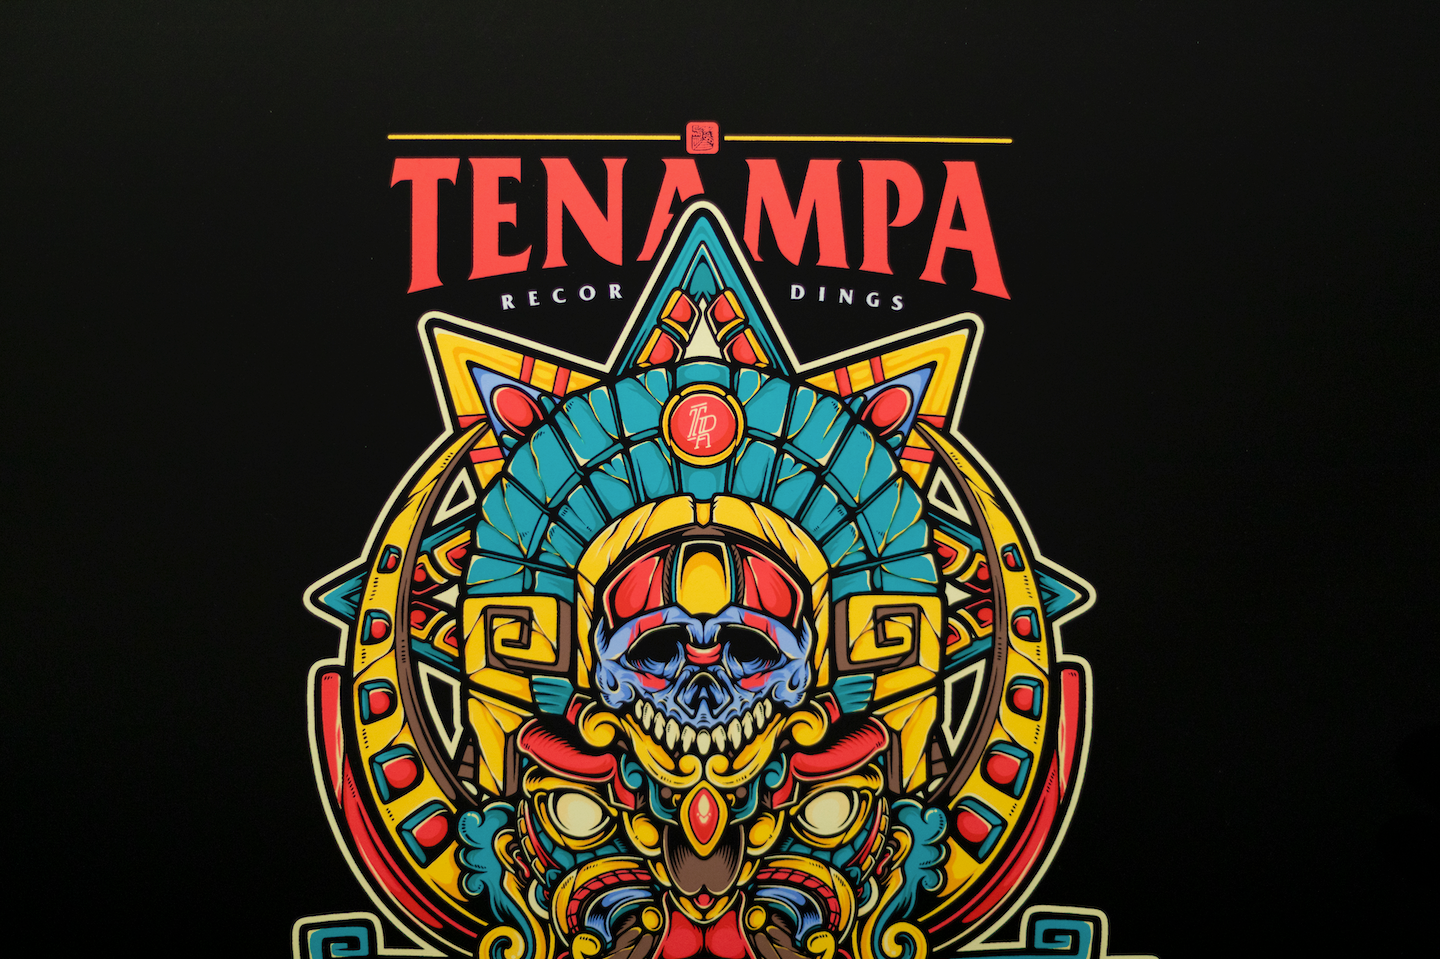 Tenampa 'Max is Here' Print